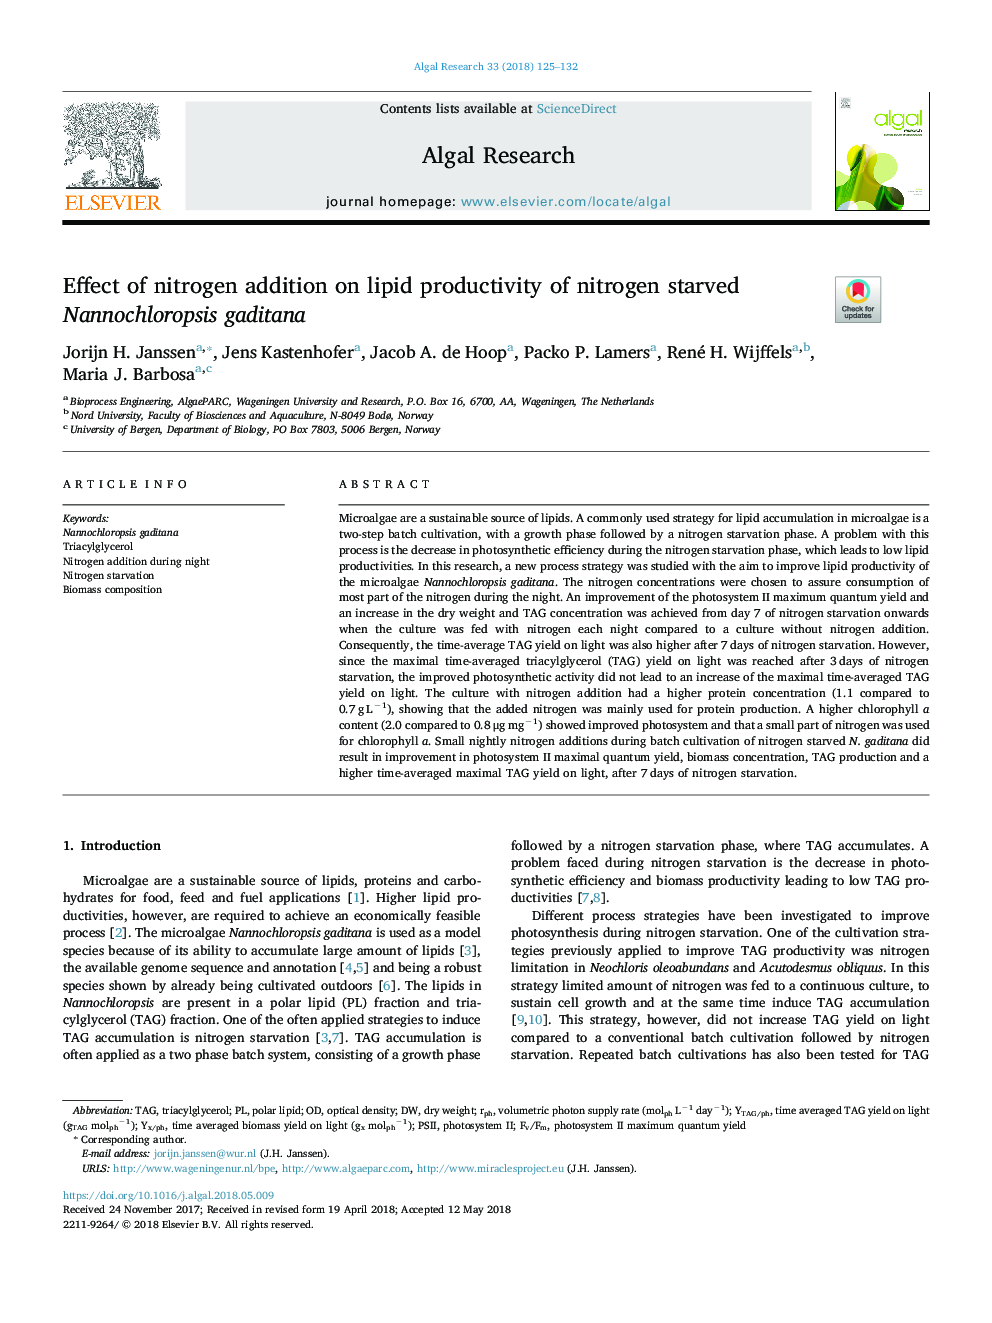 Effect of nitrogen addition on lipid productivity of nitrogen starved Nannochloropsis gaditana